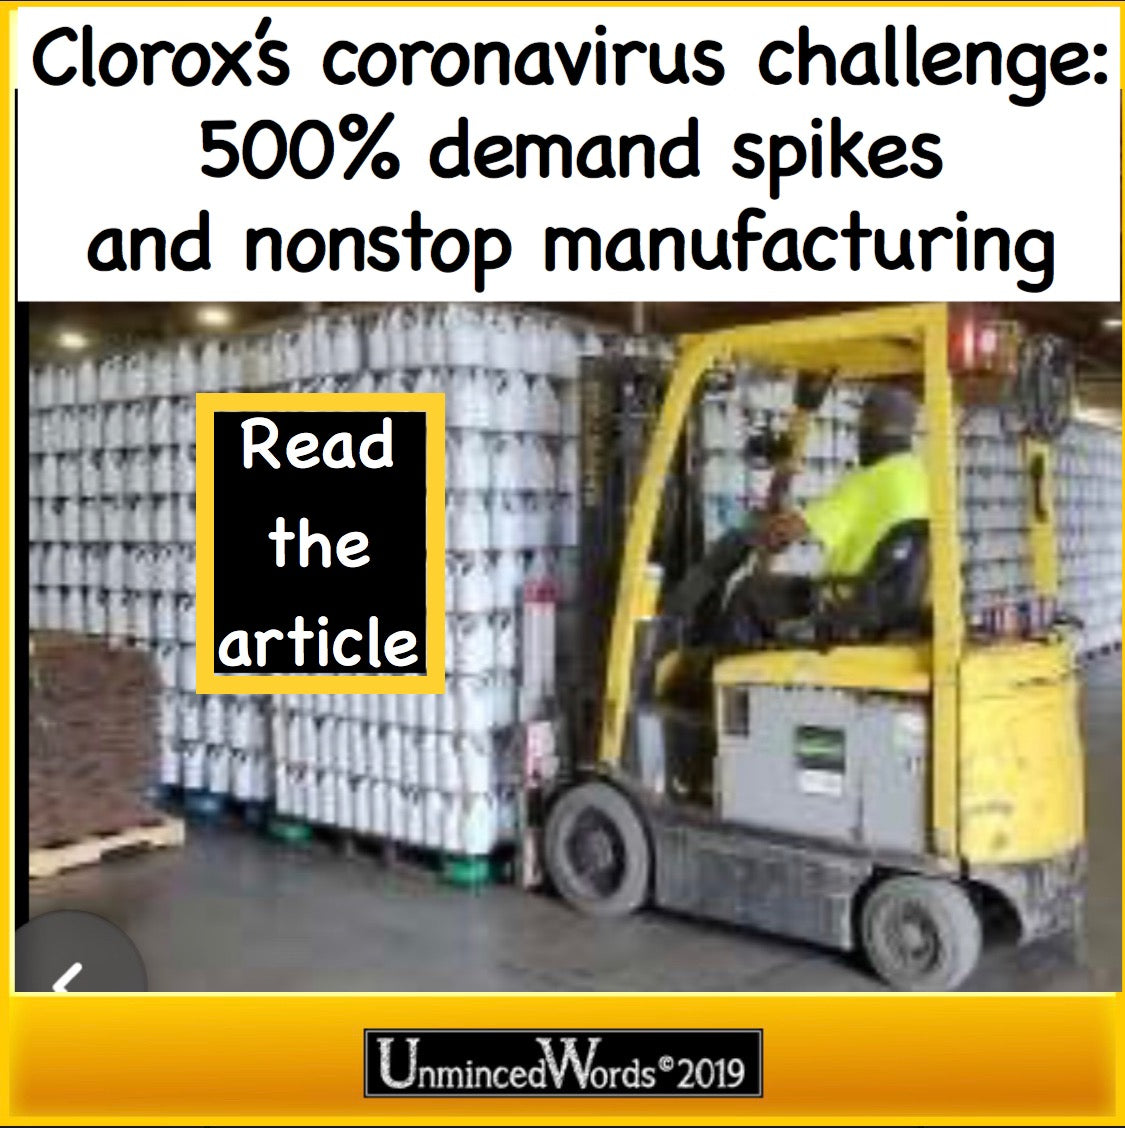 Clorox’s coronavirus challenge: 500% demand spikes and nonstop manufacturing